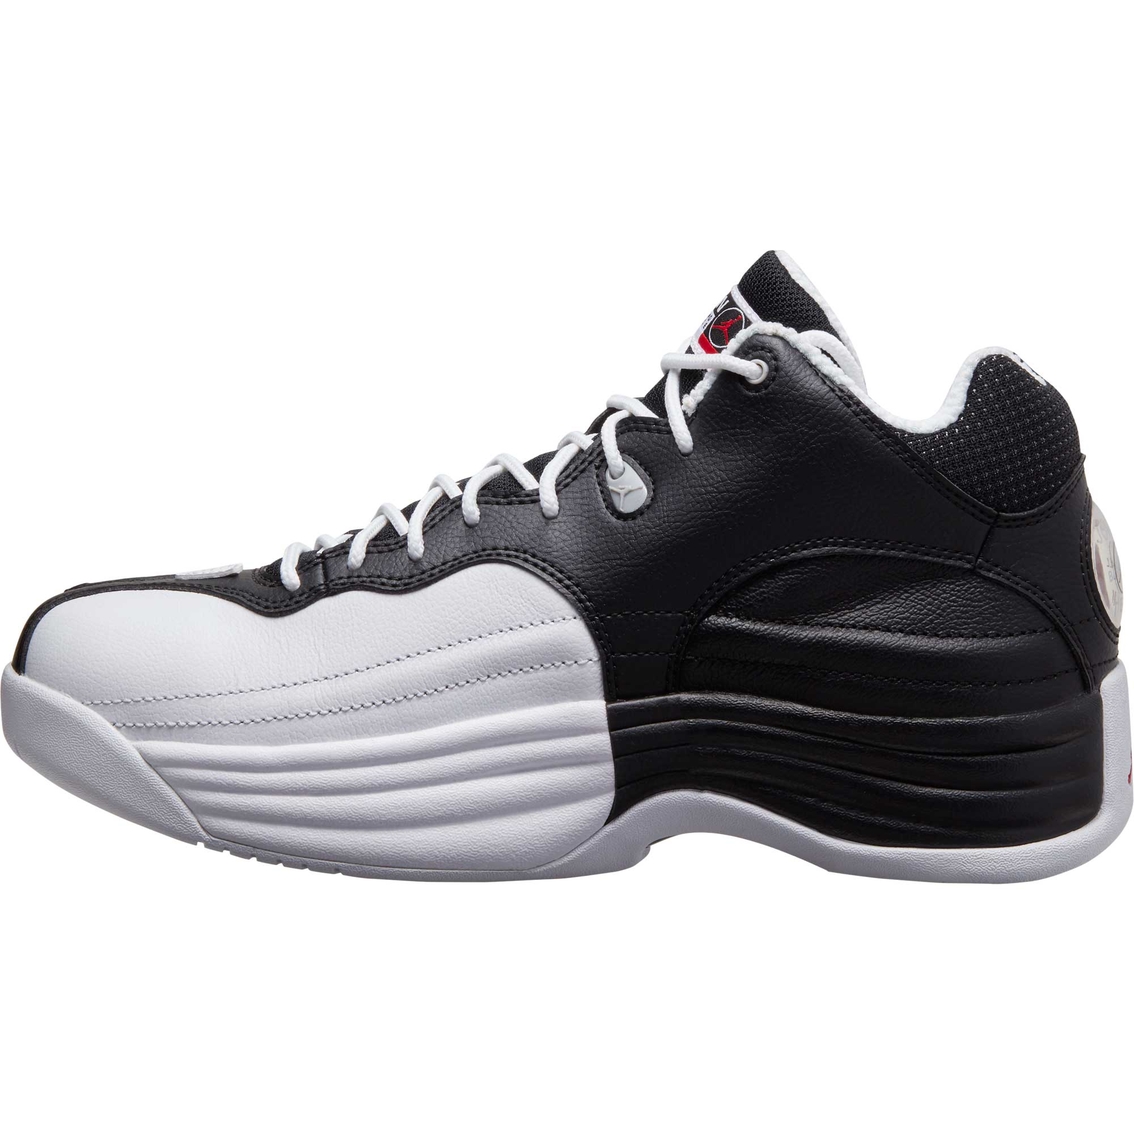 Buy > team jordan basketball shoes > in stock